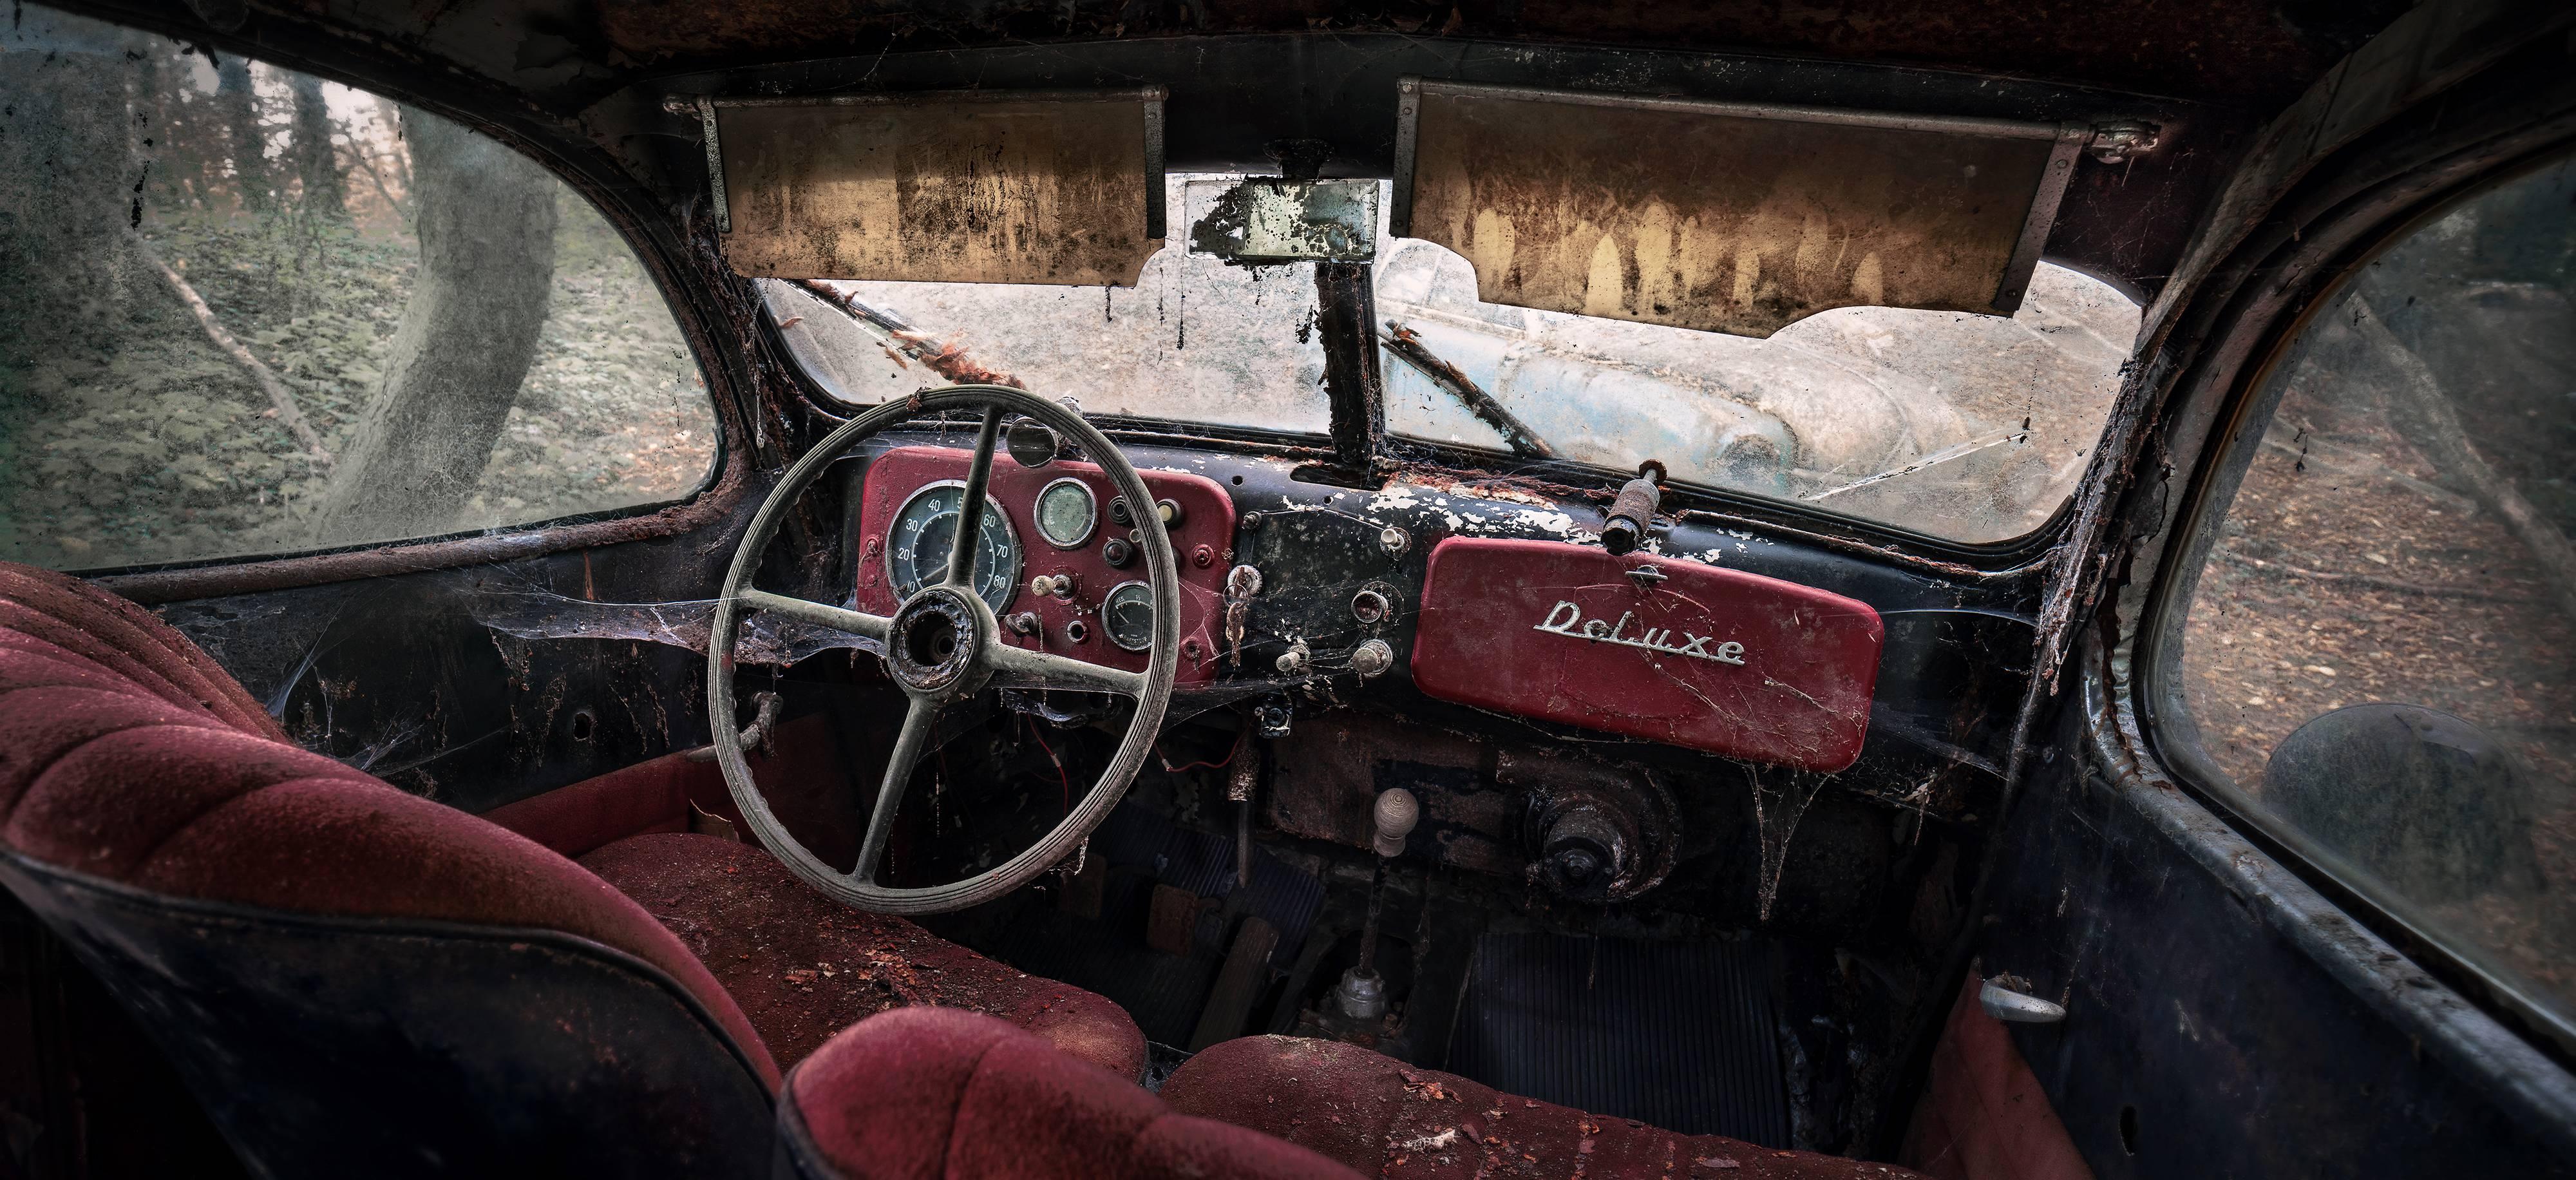 Jan Stel Color Photograph - Abandoned Car 02 (BMW) - 2016